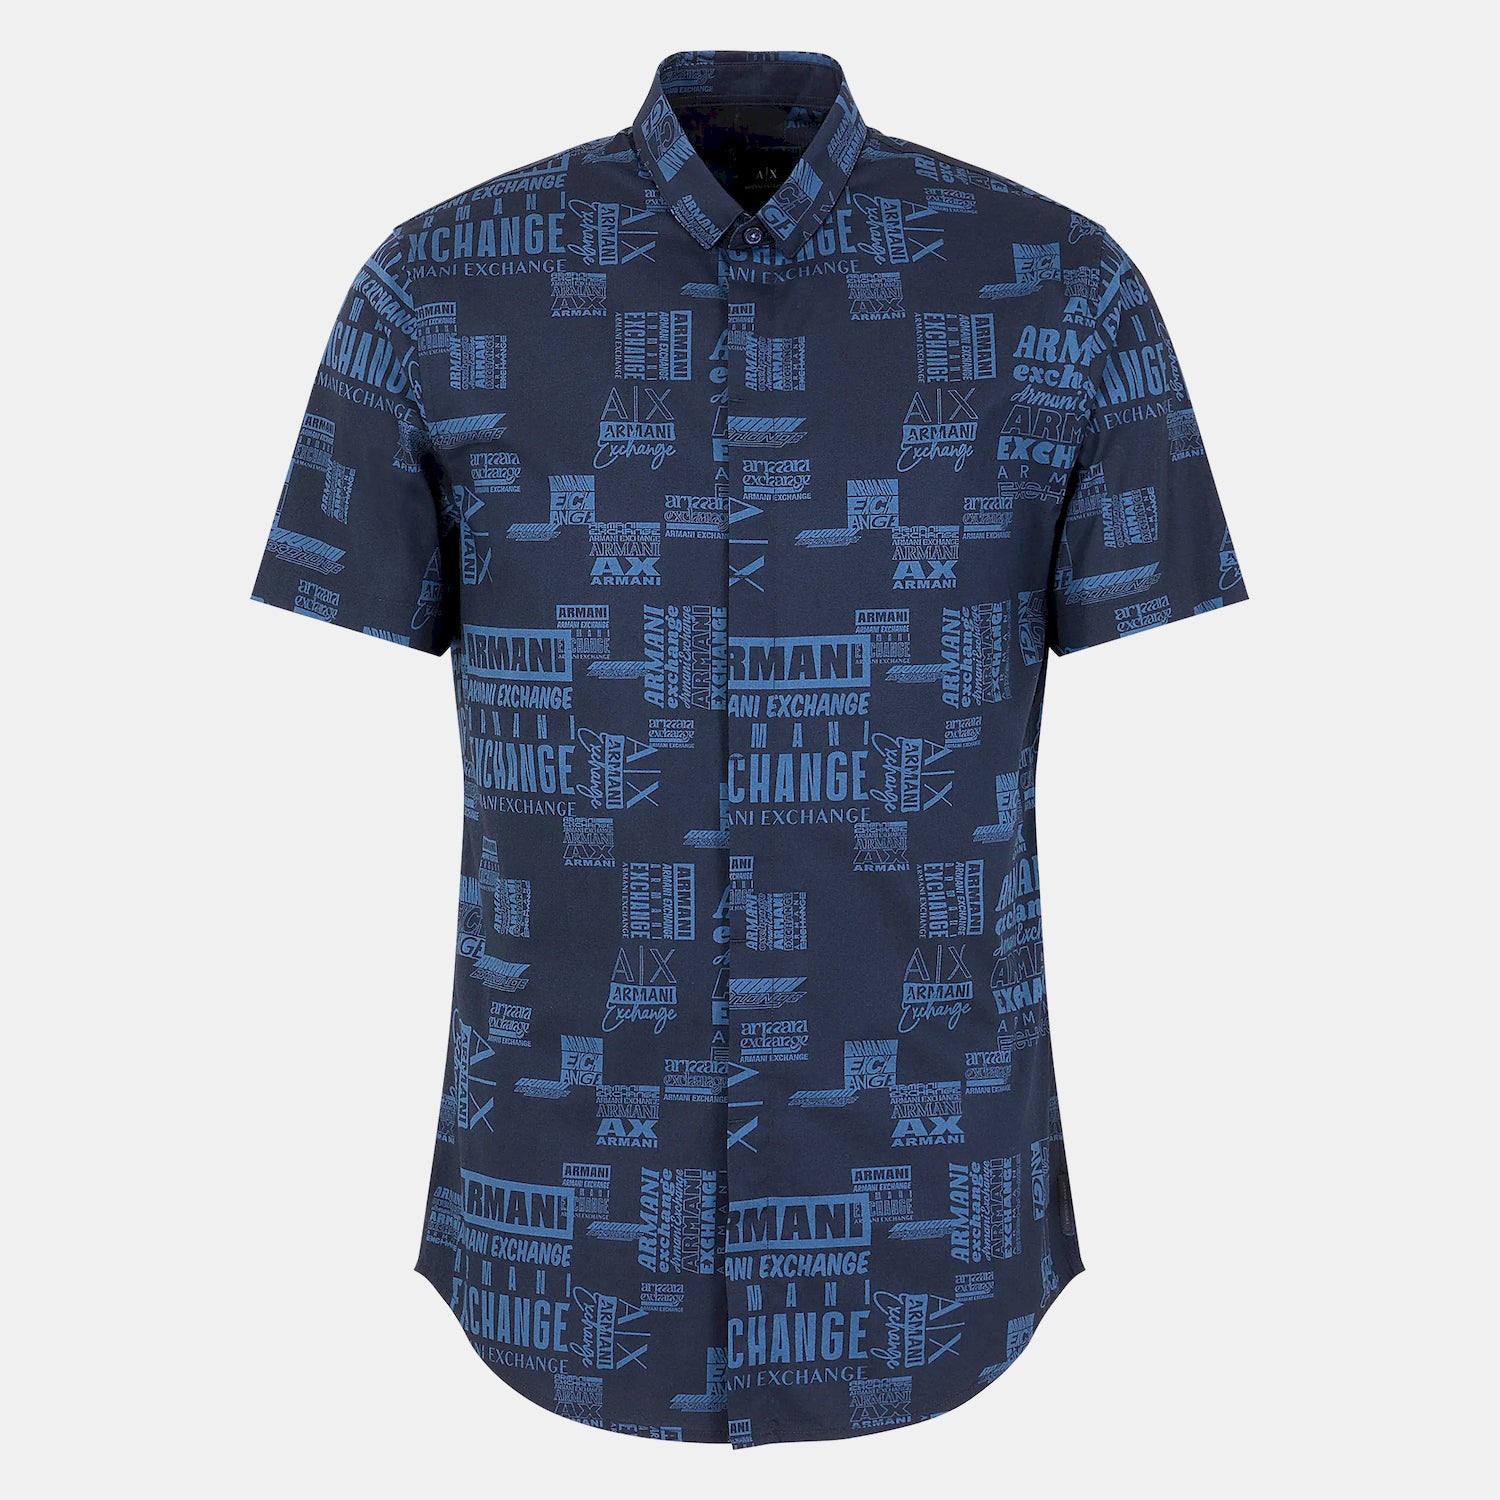 Armani Camisa  Shirt 3dzc04 Zneaz Navy Blue Navy Blue_shot5